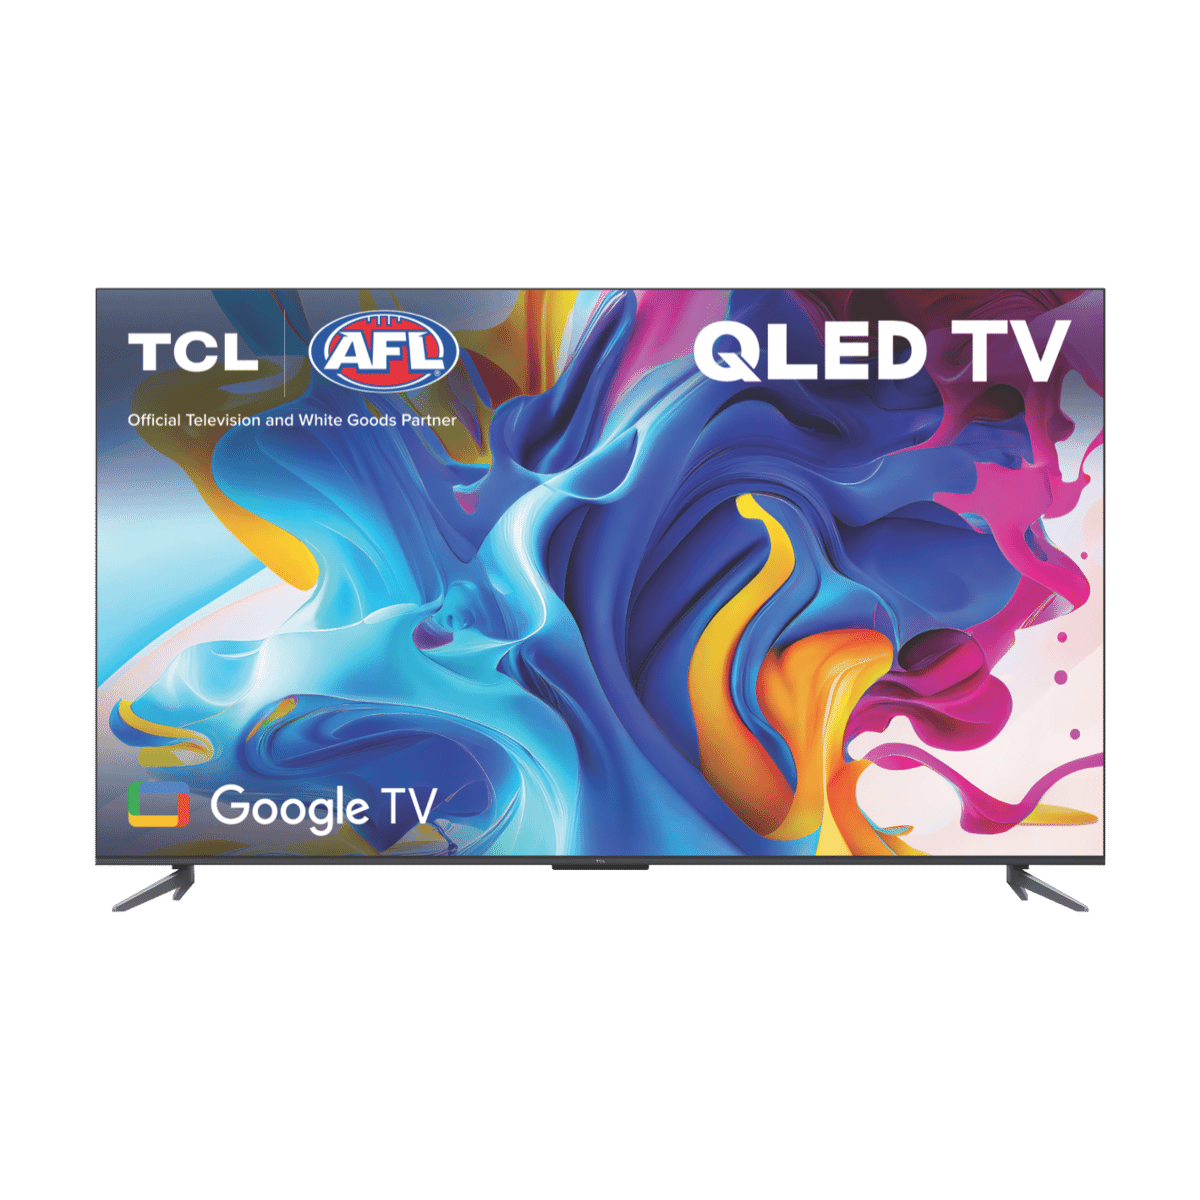 TCL C645 (55C645K) 4K TV Review